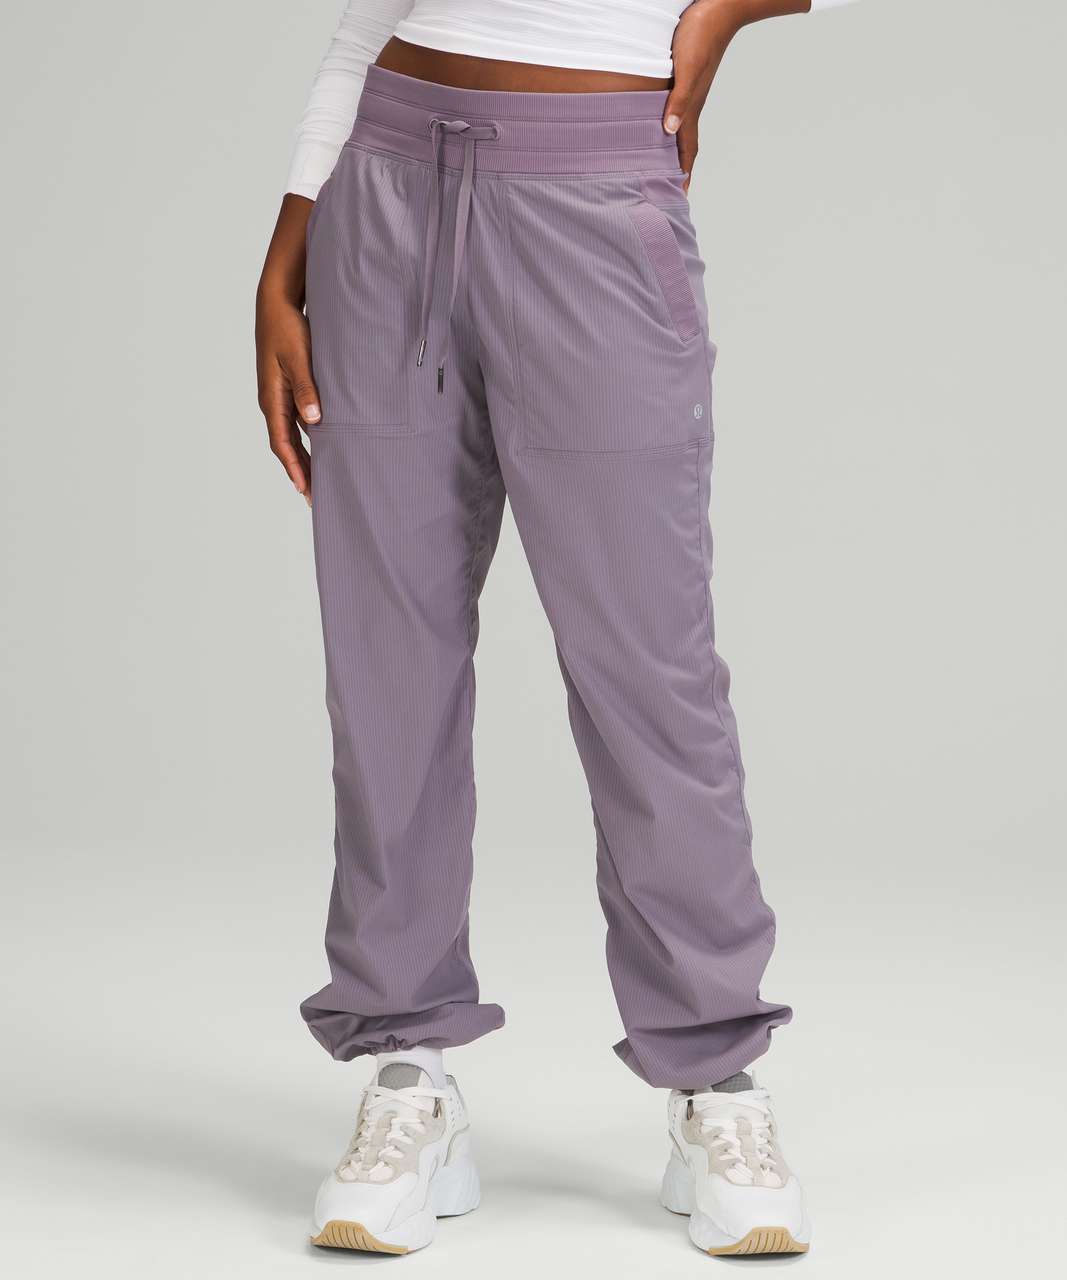 Lululemon Dance studio Pant II *Liner Purple Size 8 - $180 (49% Off